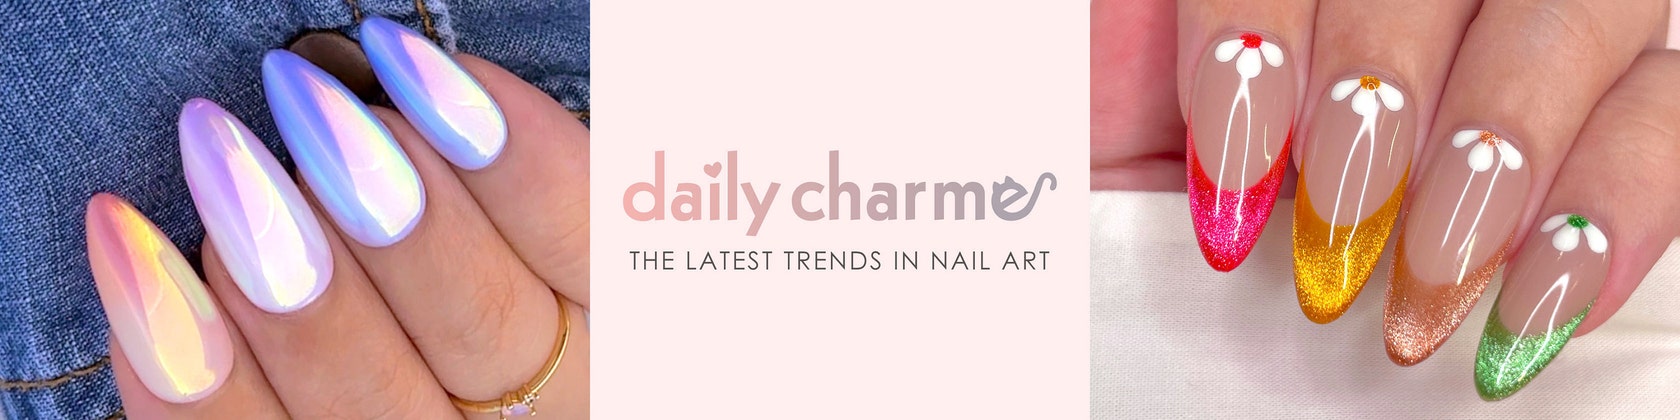 Daily Charme Nail Art Foil Paper / Rose Gold Pink Metallic